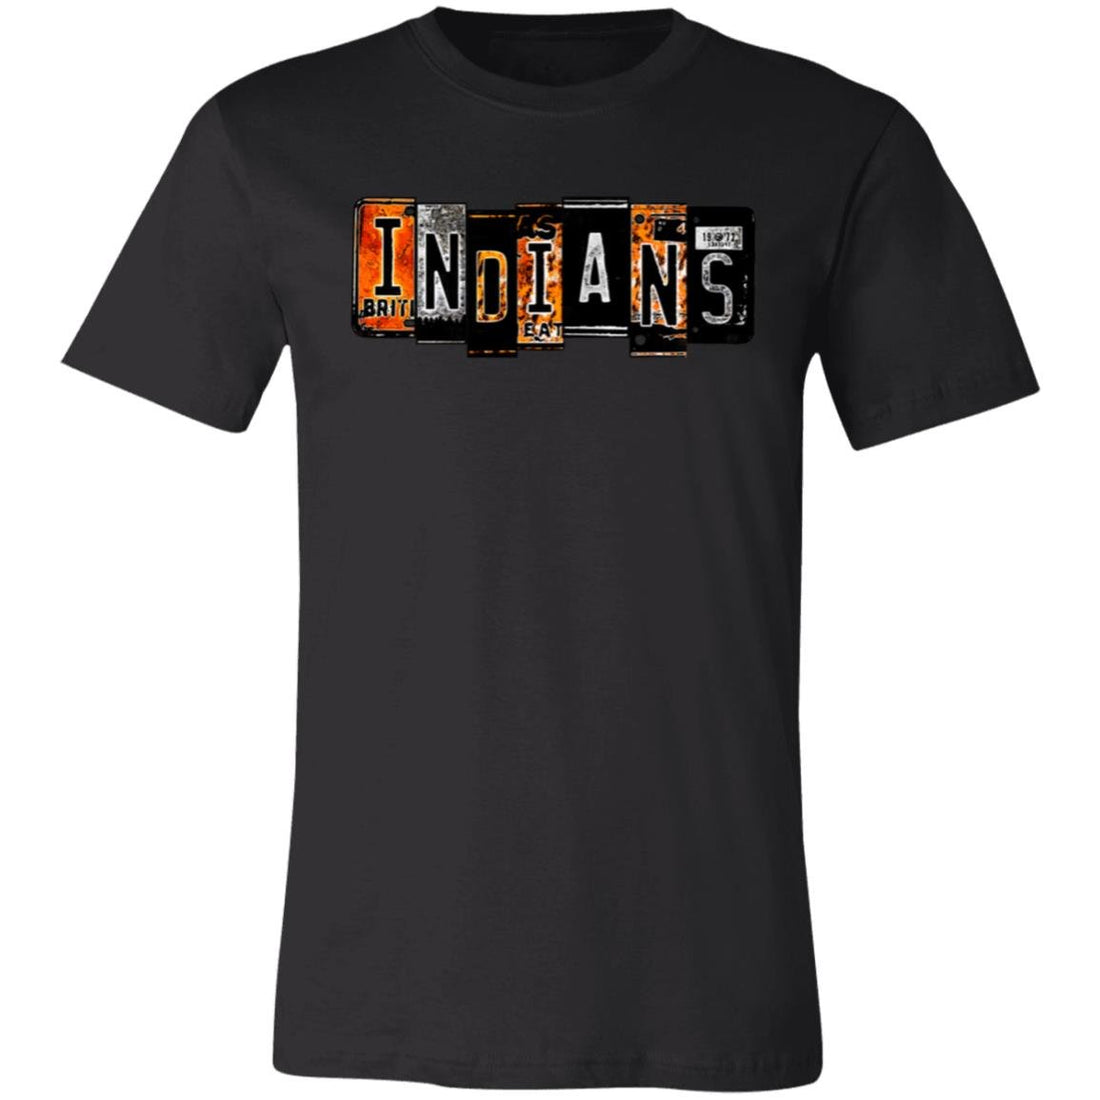 Indians Plates Short-Sleeve T-Shirt - T-Shirts - Positively Sassy - Indians Plates Short-Sleeve T-Shirt